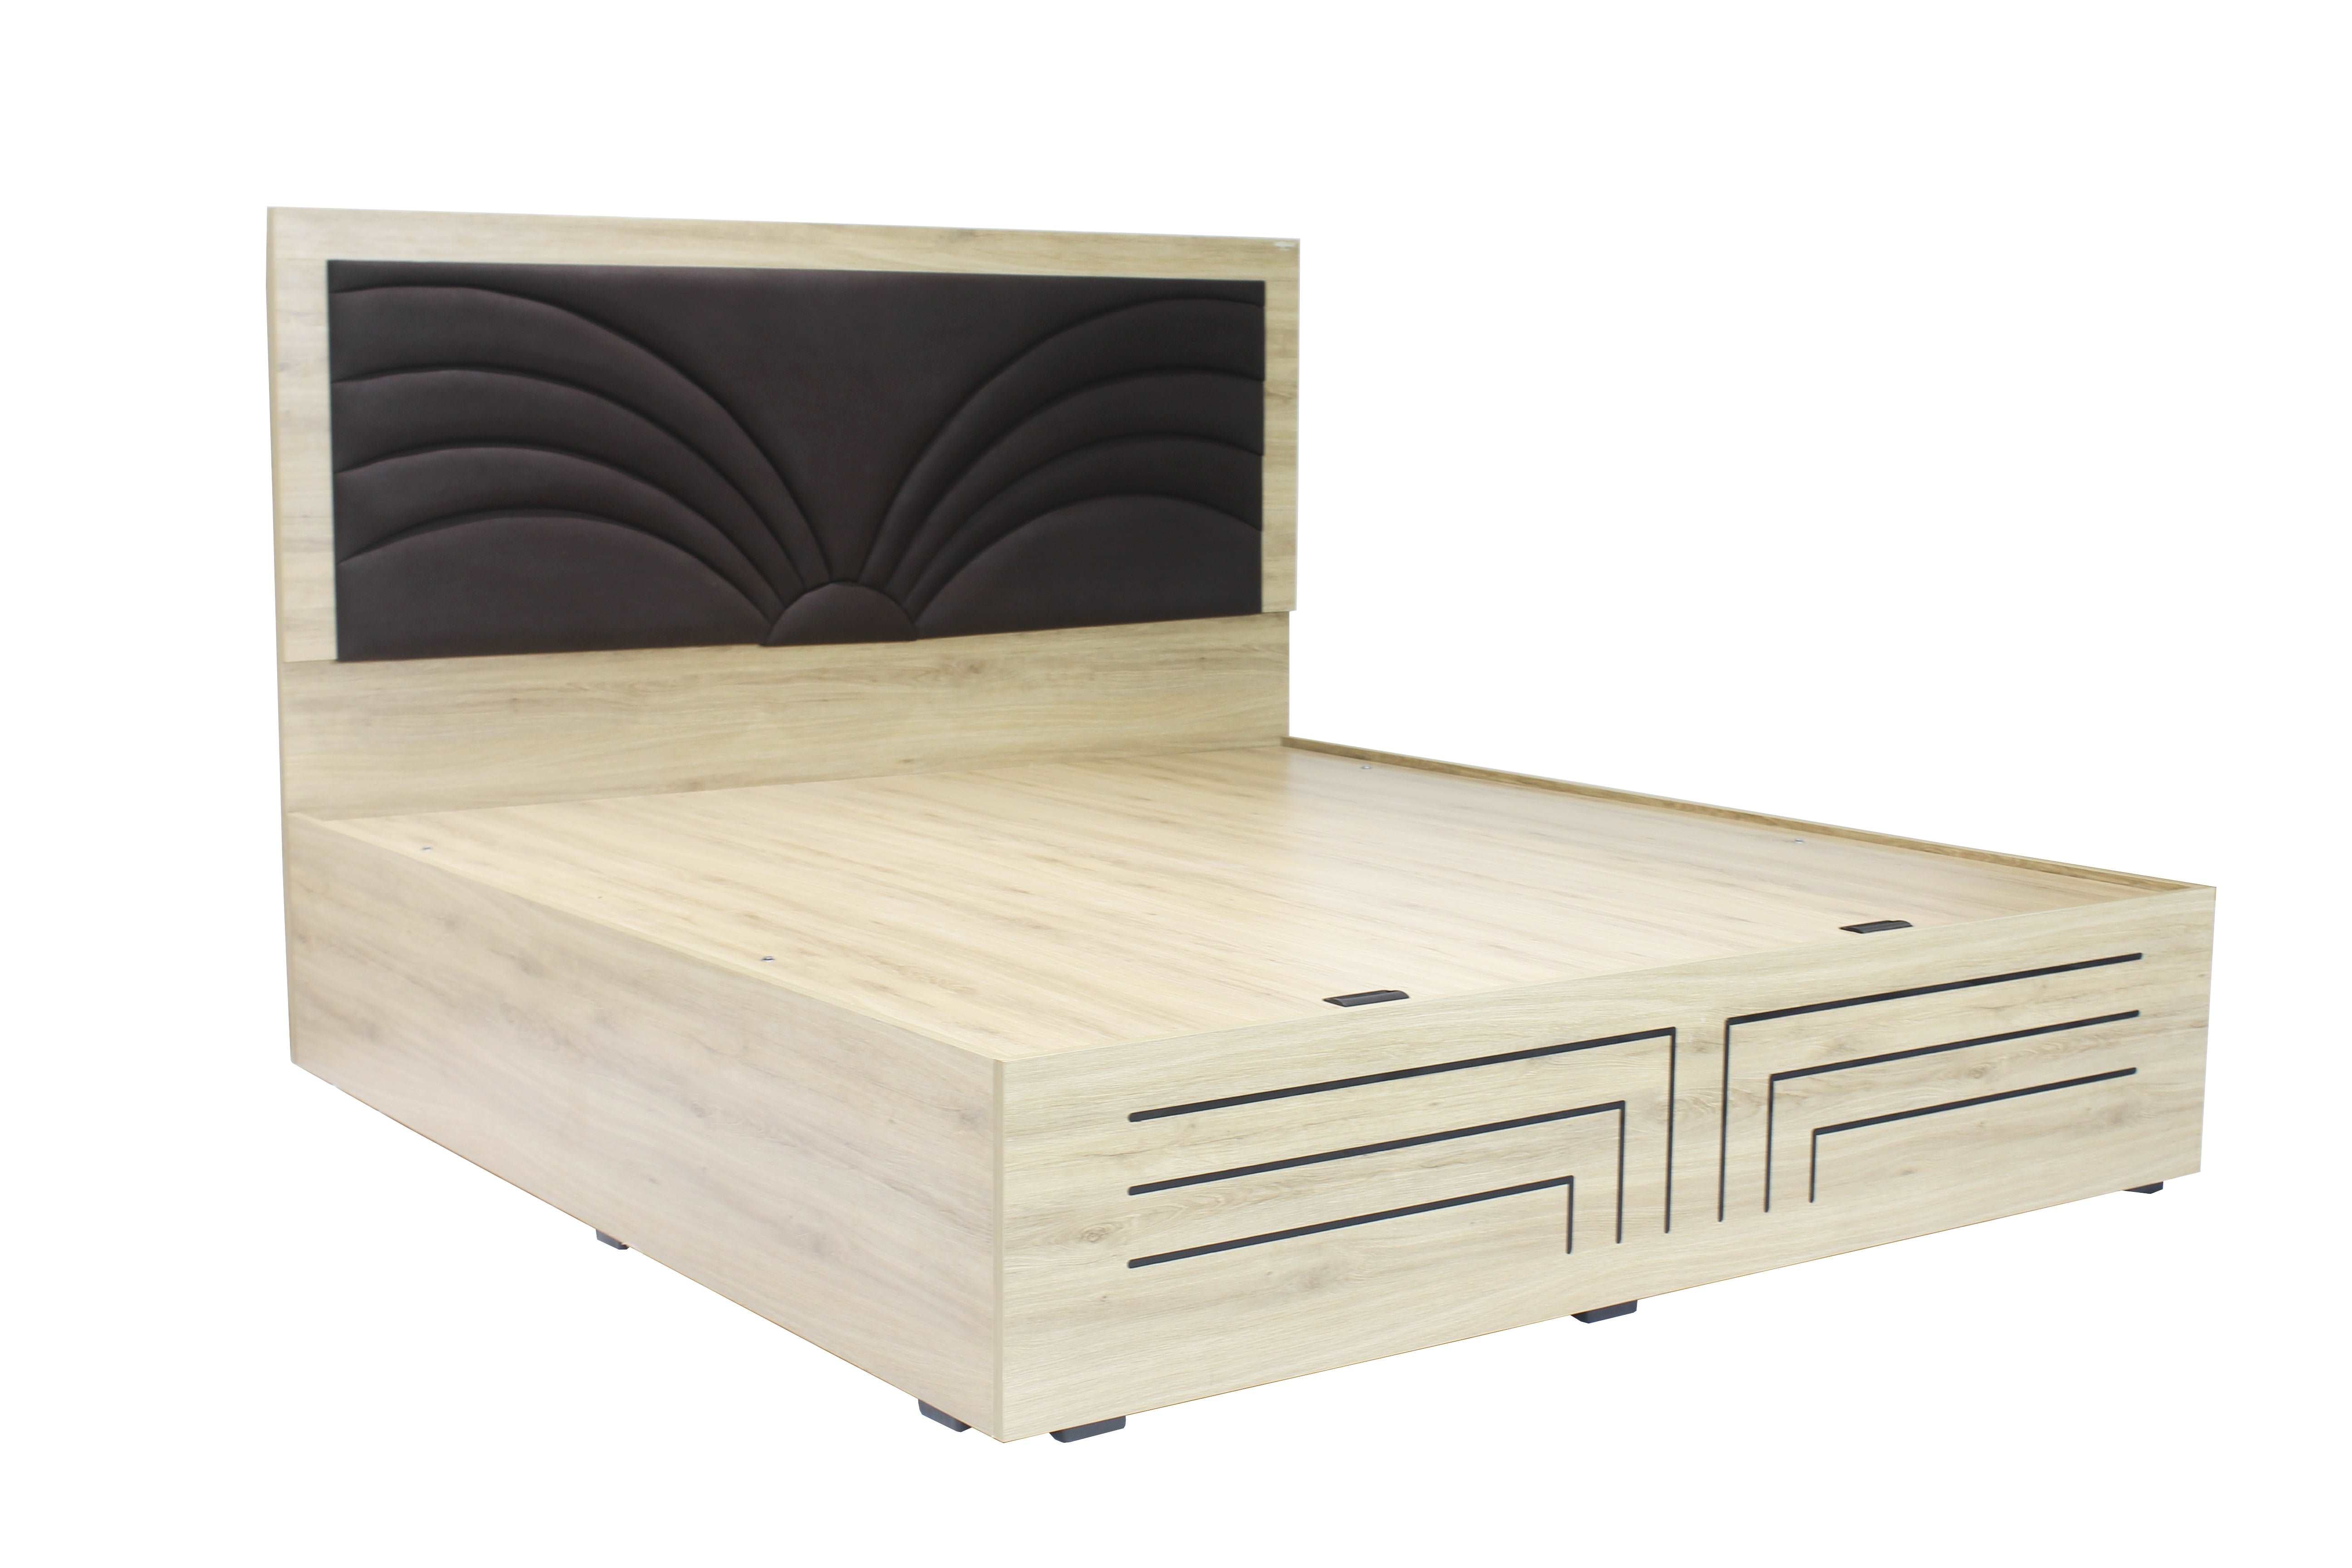 Rubix King Size Hydraulic Storage Bed